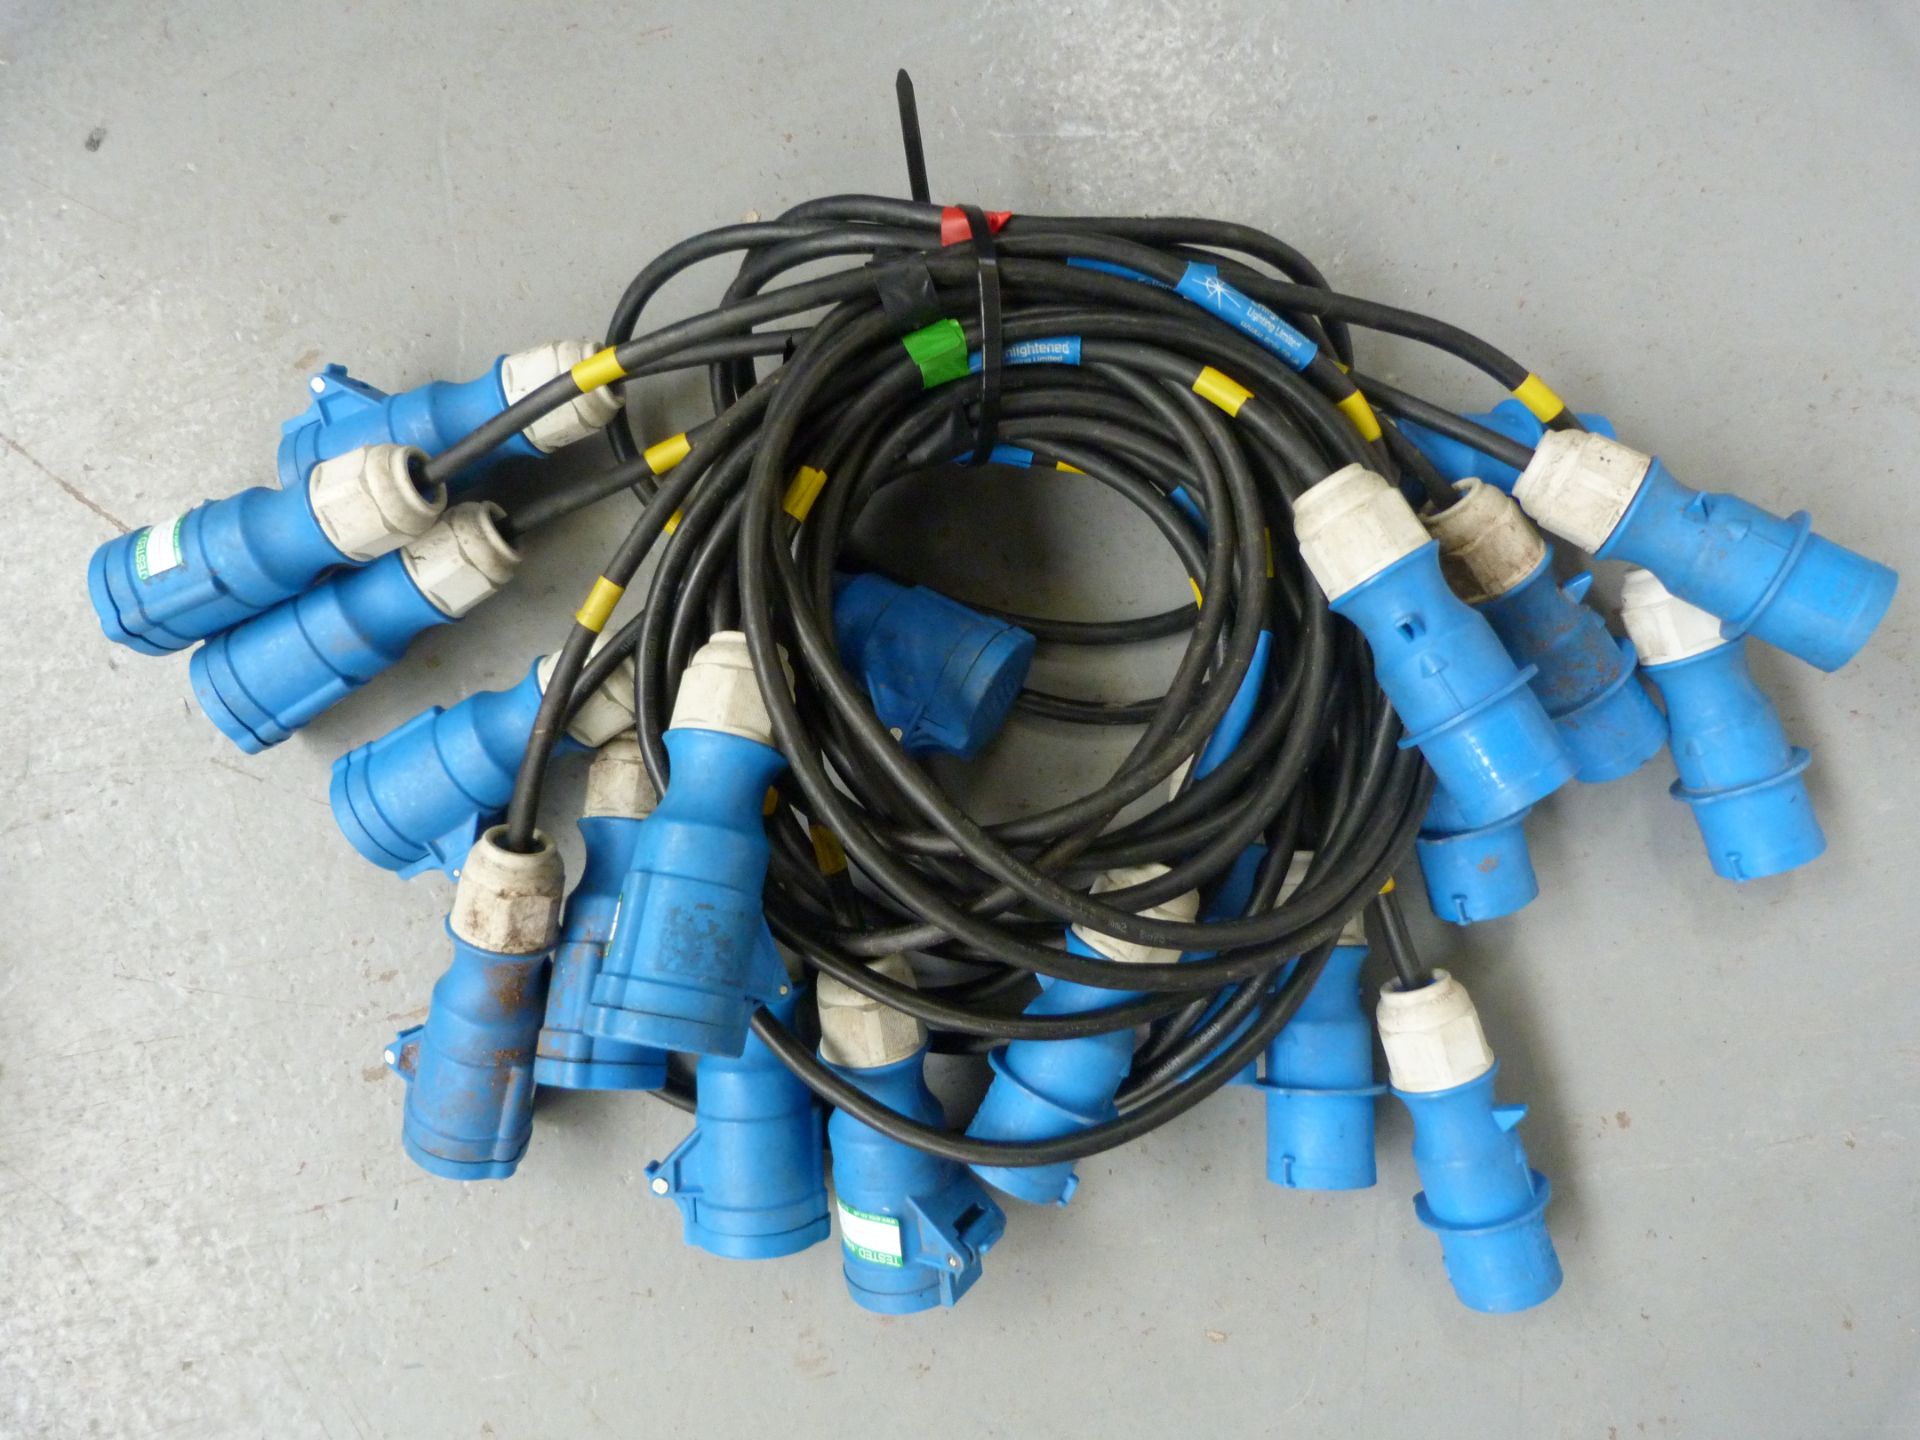 10x 2m 16A Cable HO7 - 1.5mm Blue Connectors. Ex-hire/Fair Condition. Photo Representative - Image 3 of 3